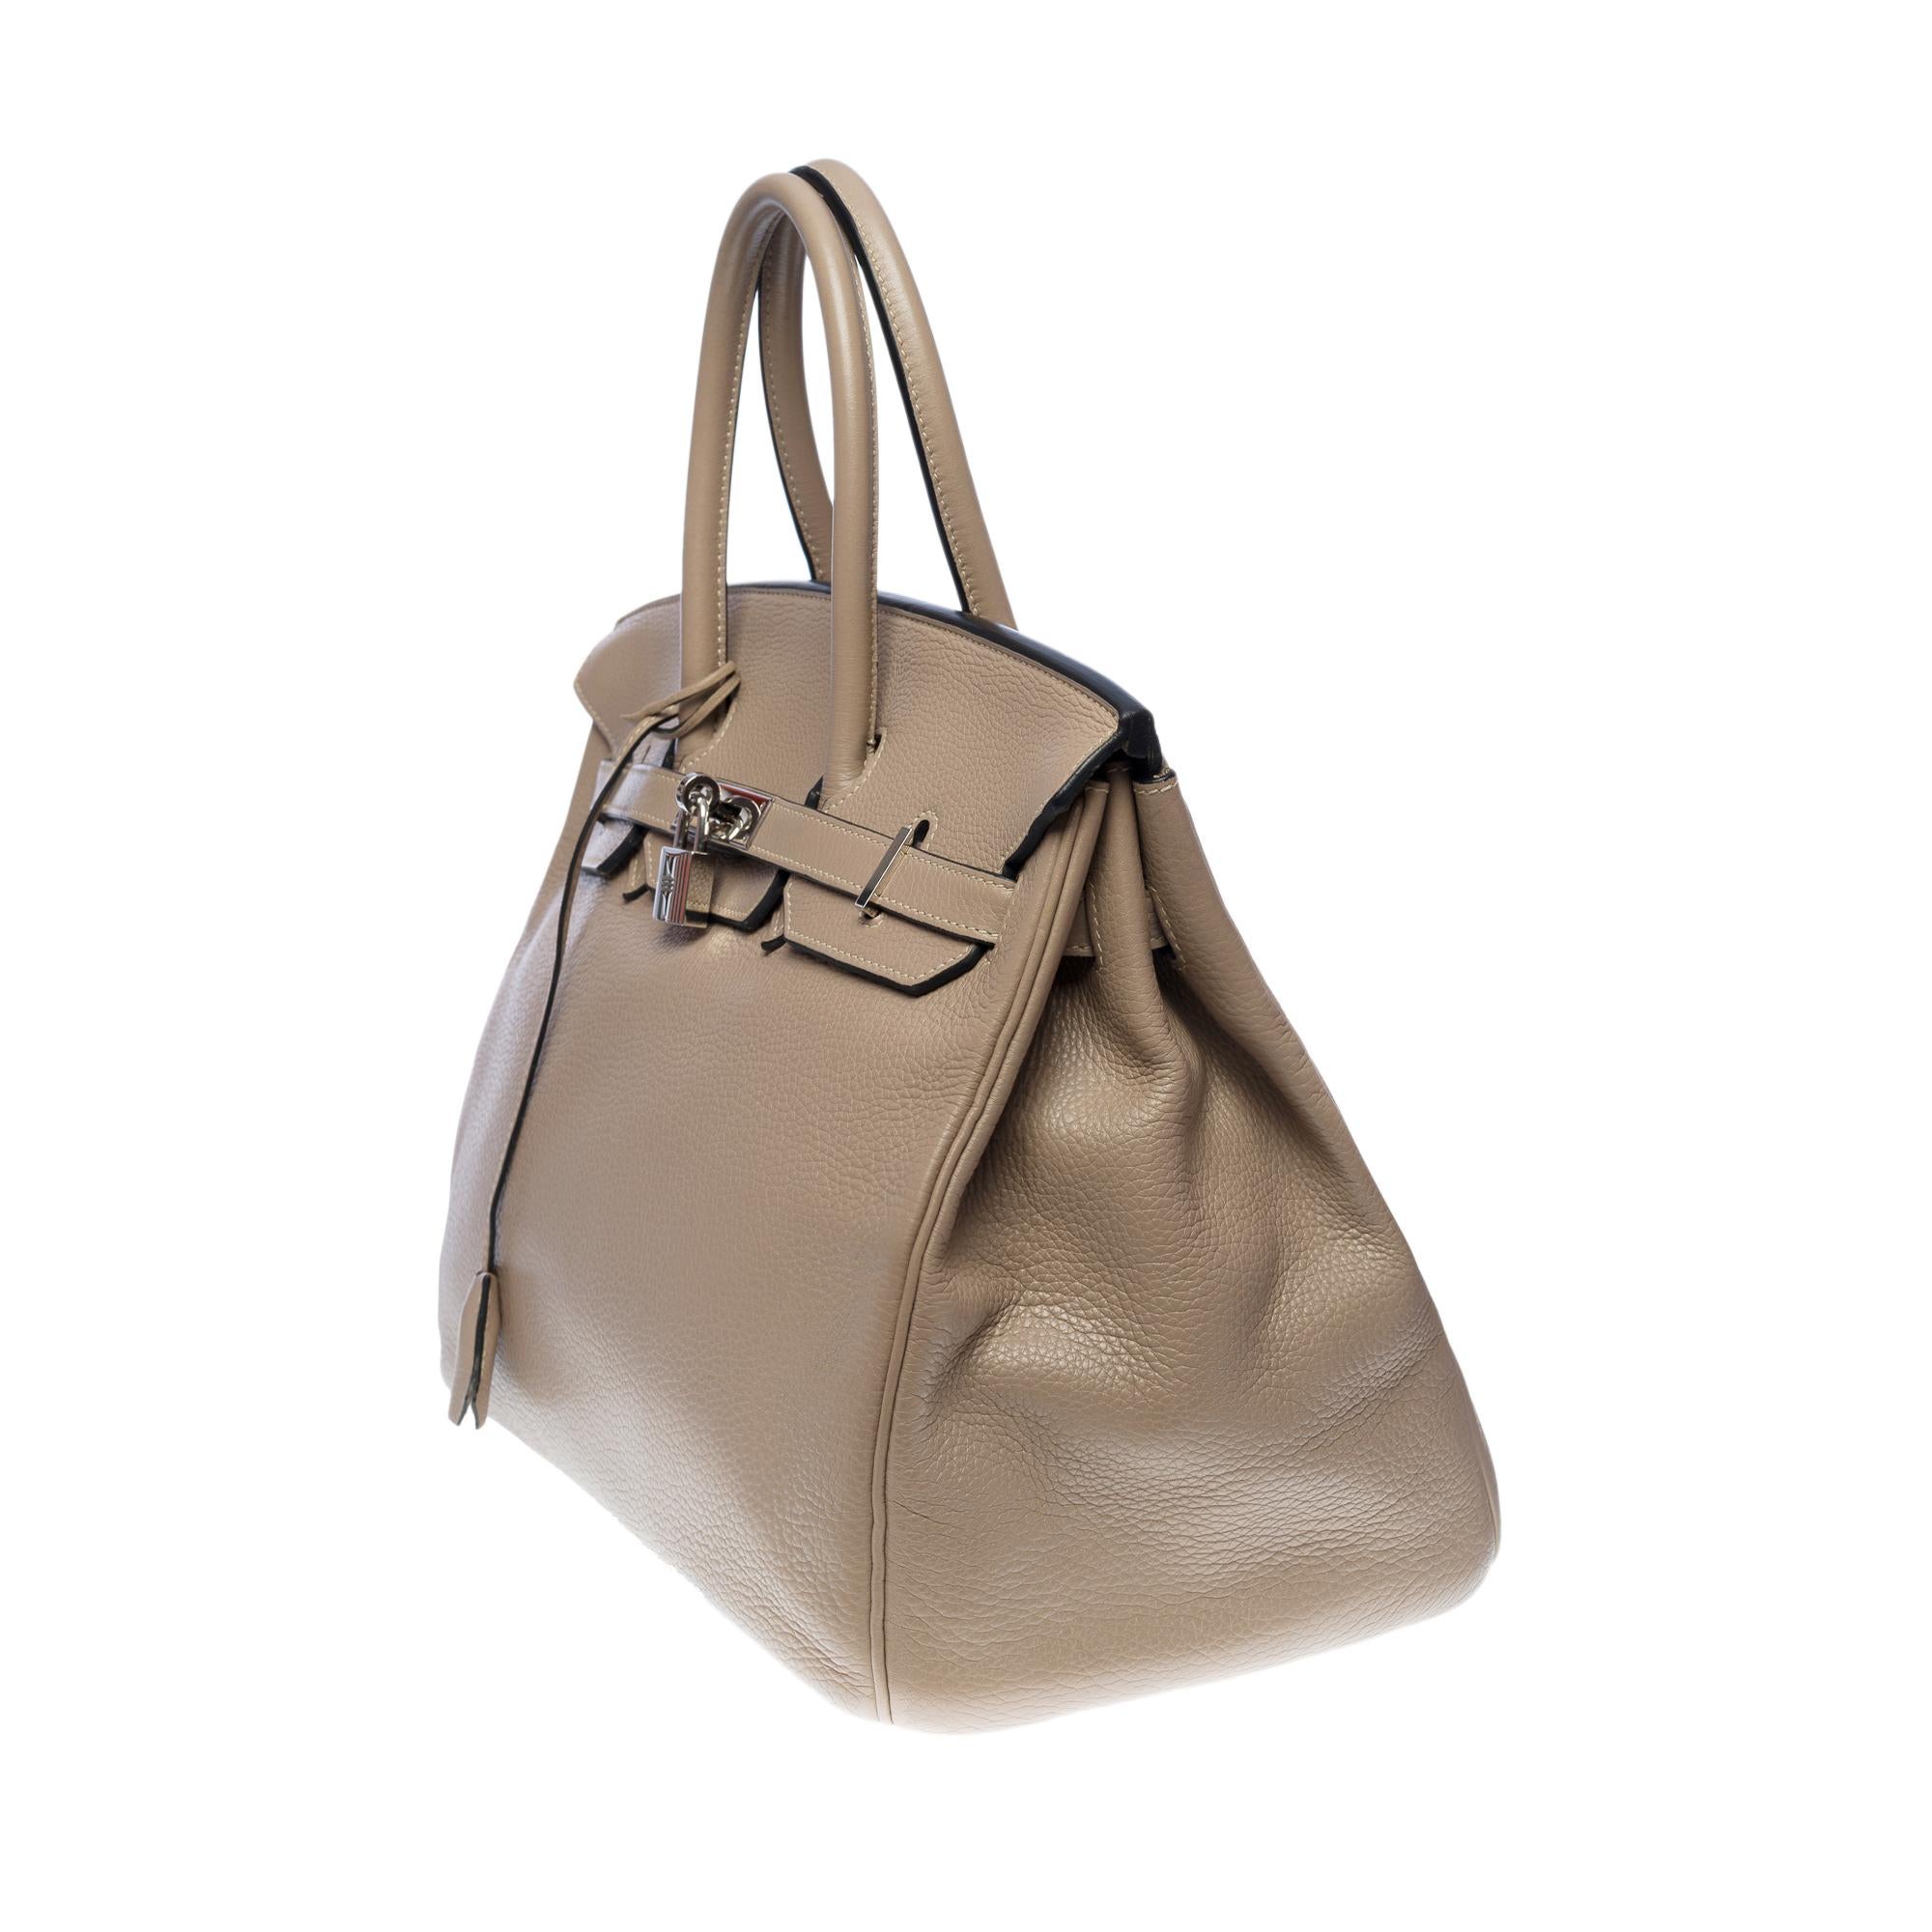 Women's or Men's Superb Hermes Birkin 35 cm handbag in dove gray Togo leather, SHW